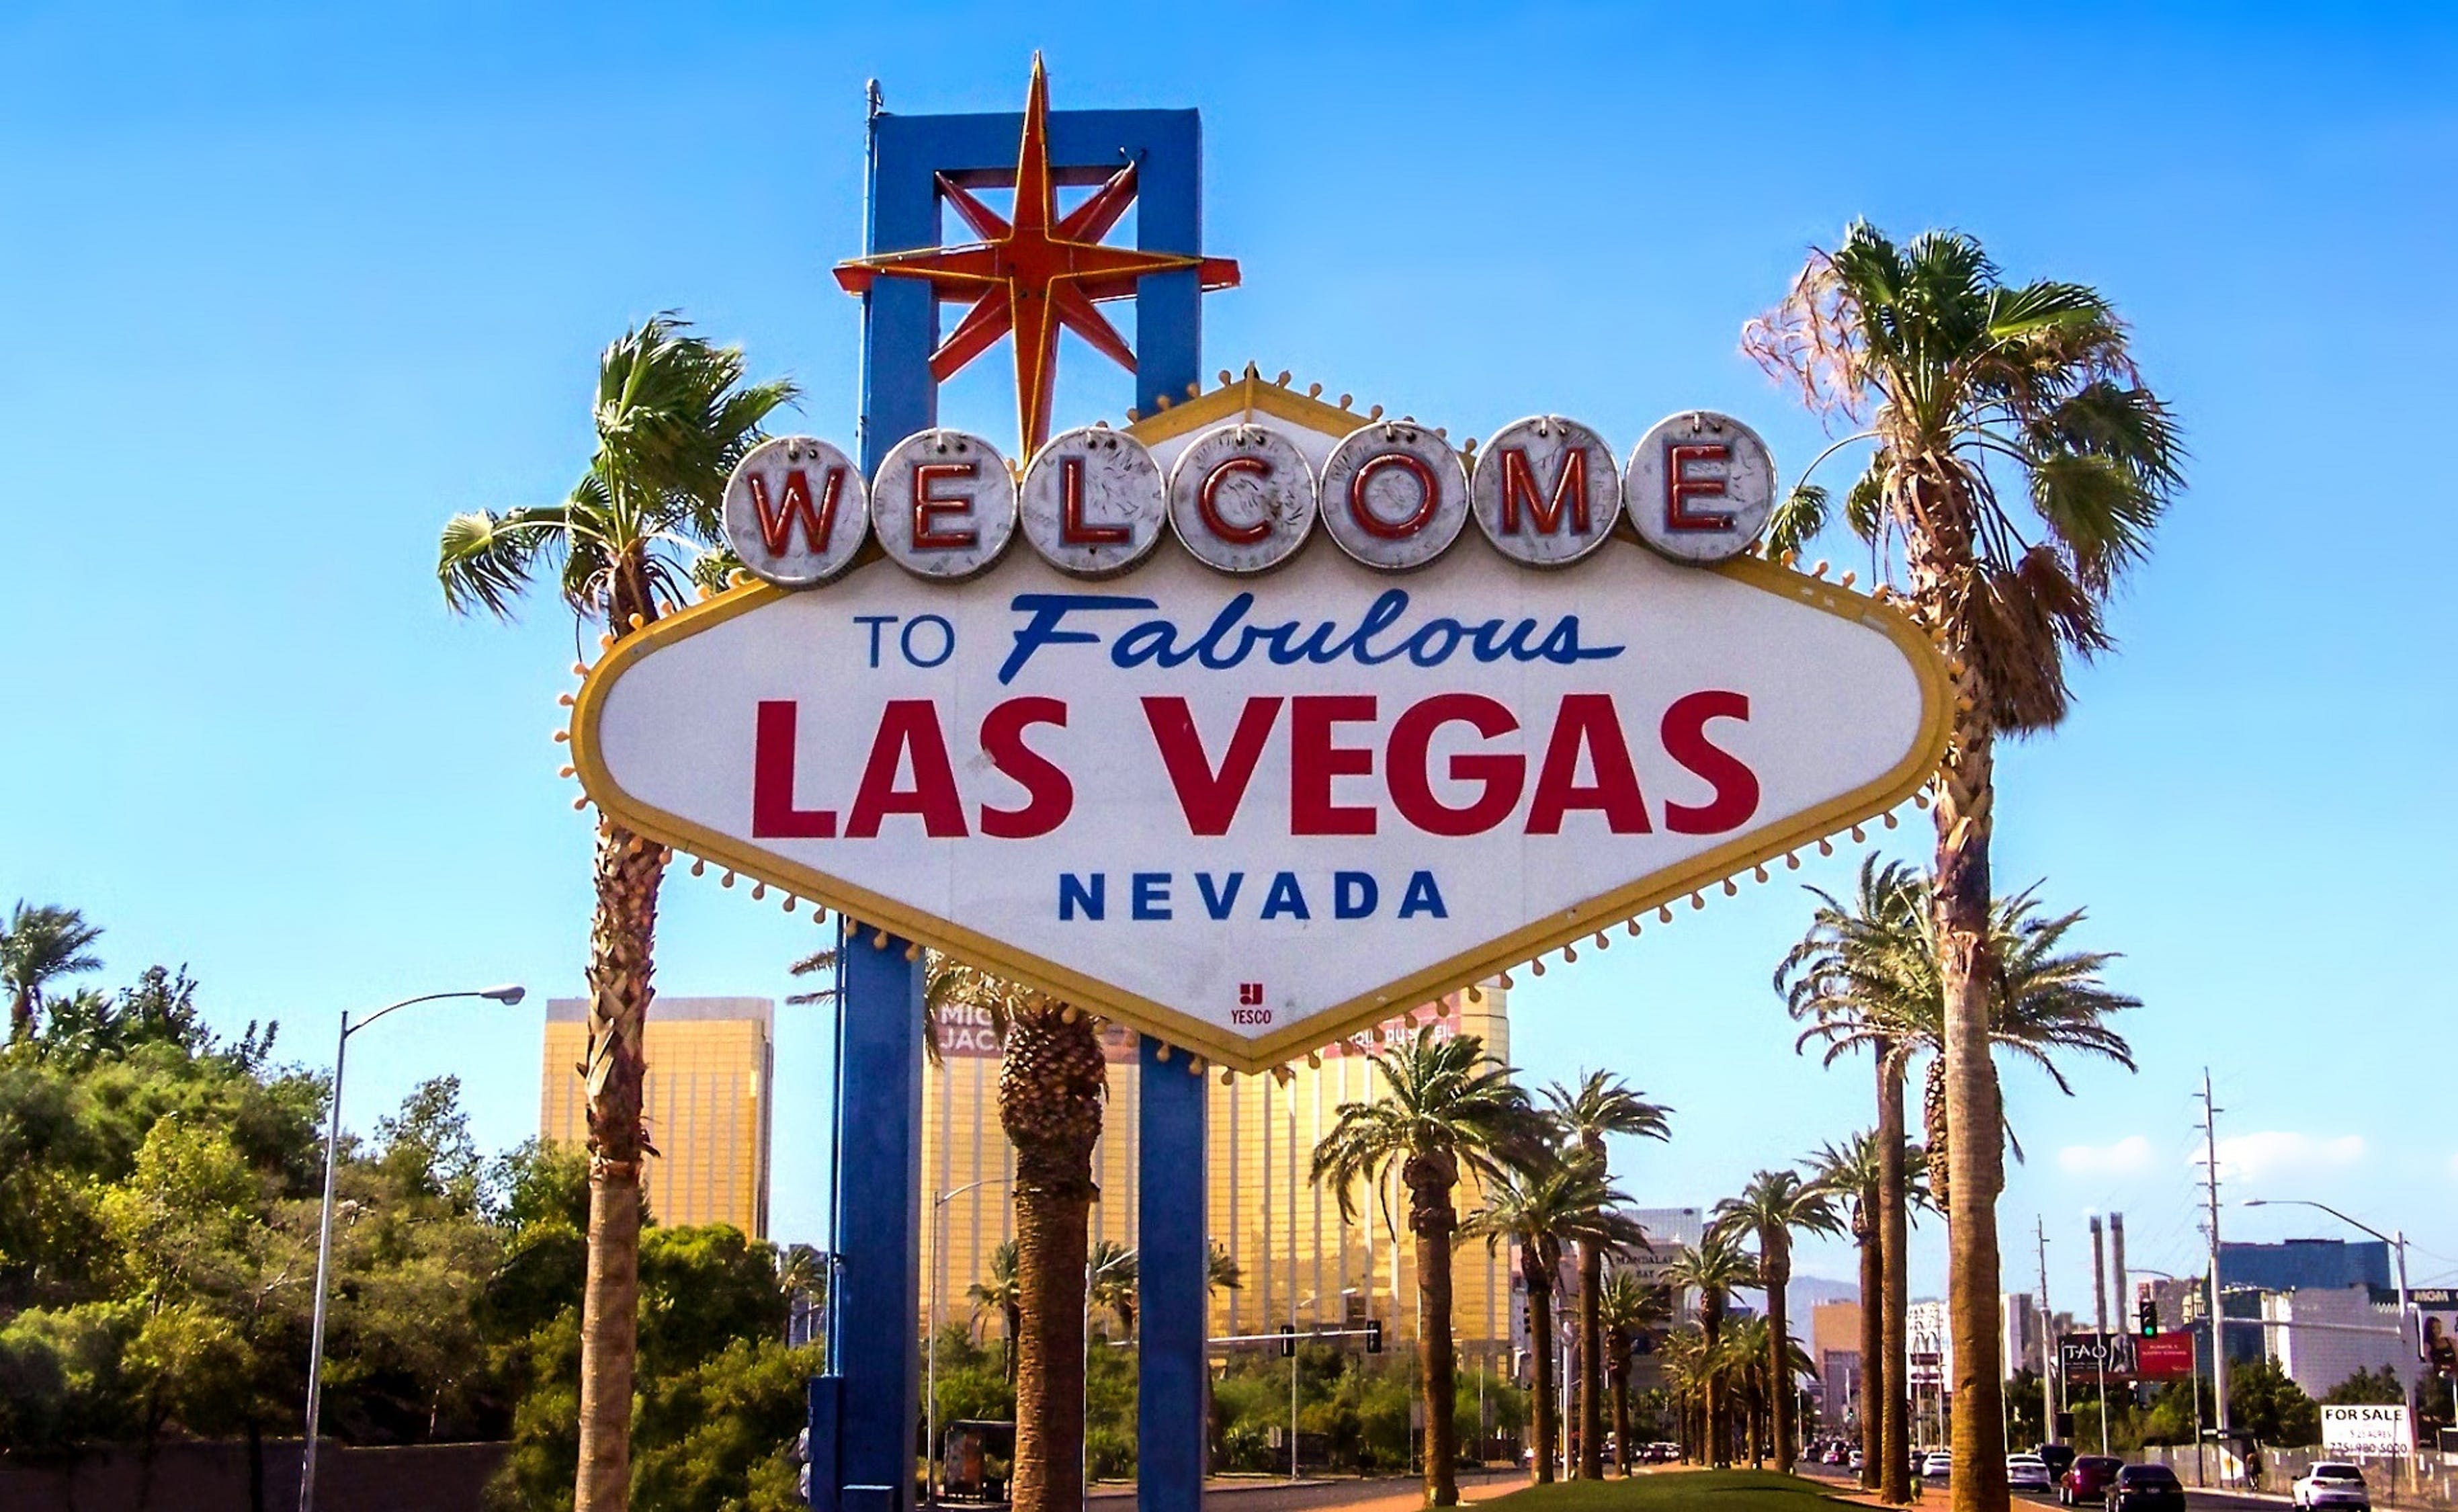 20 BEST Las Vegas Buffet Restaurants For Your Big Appetite | TravelRight